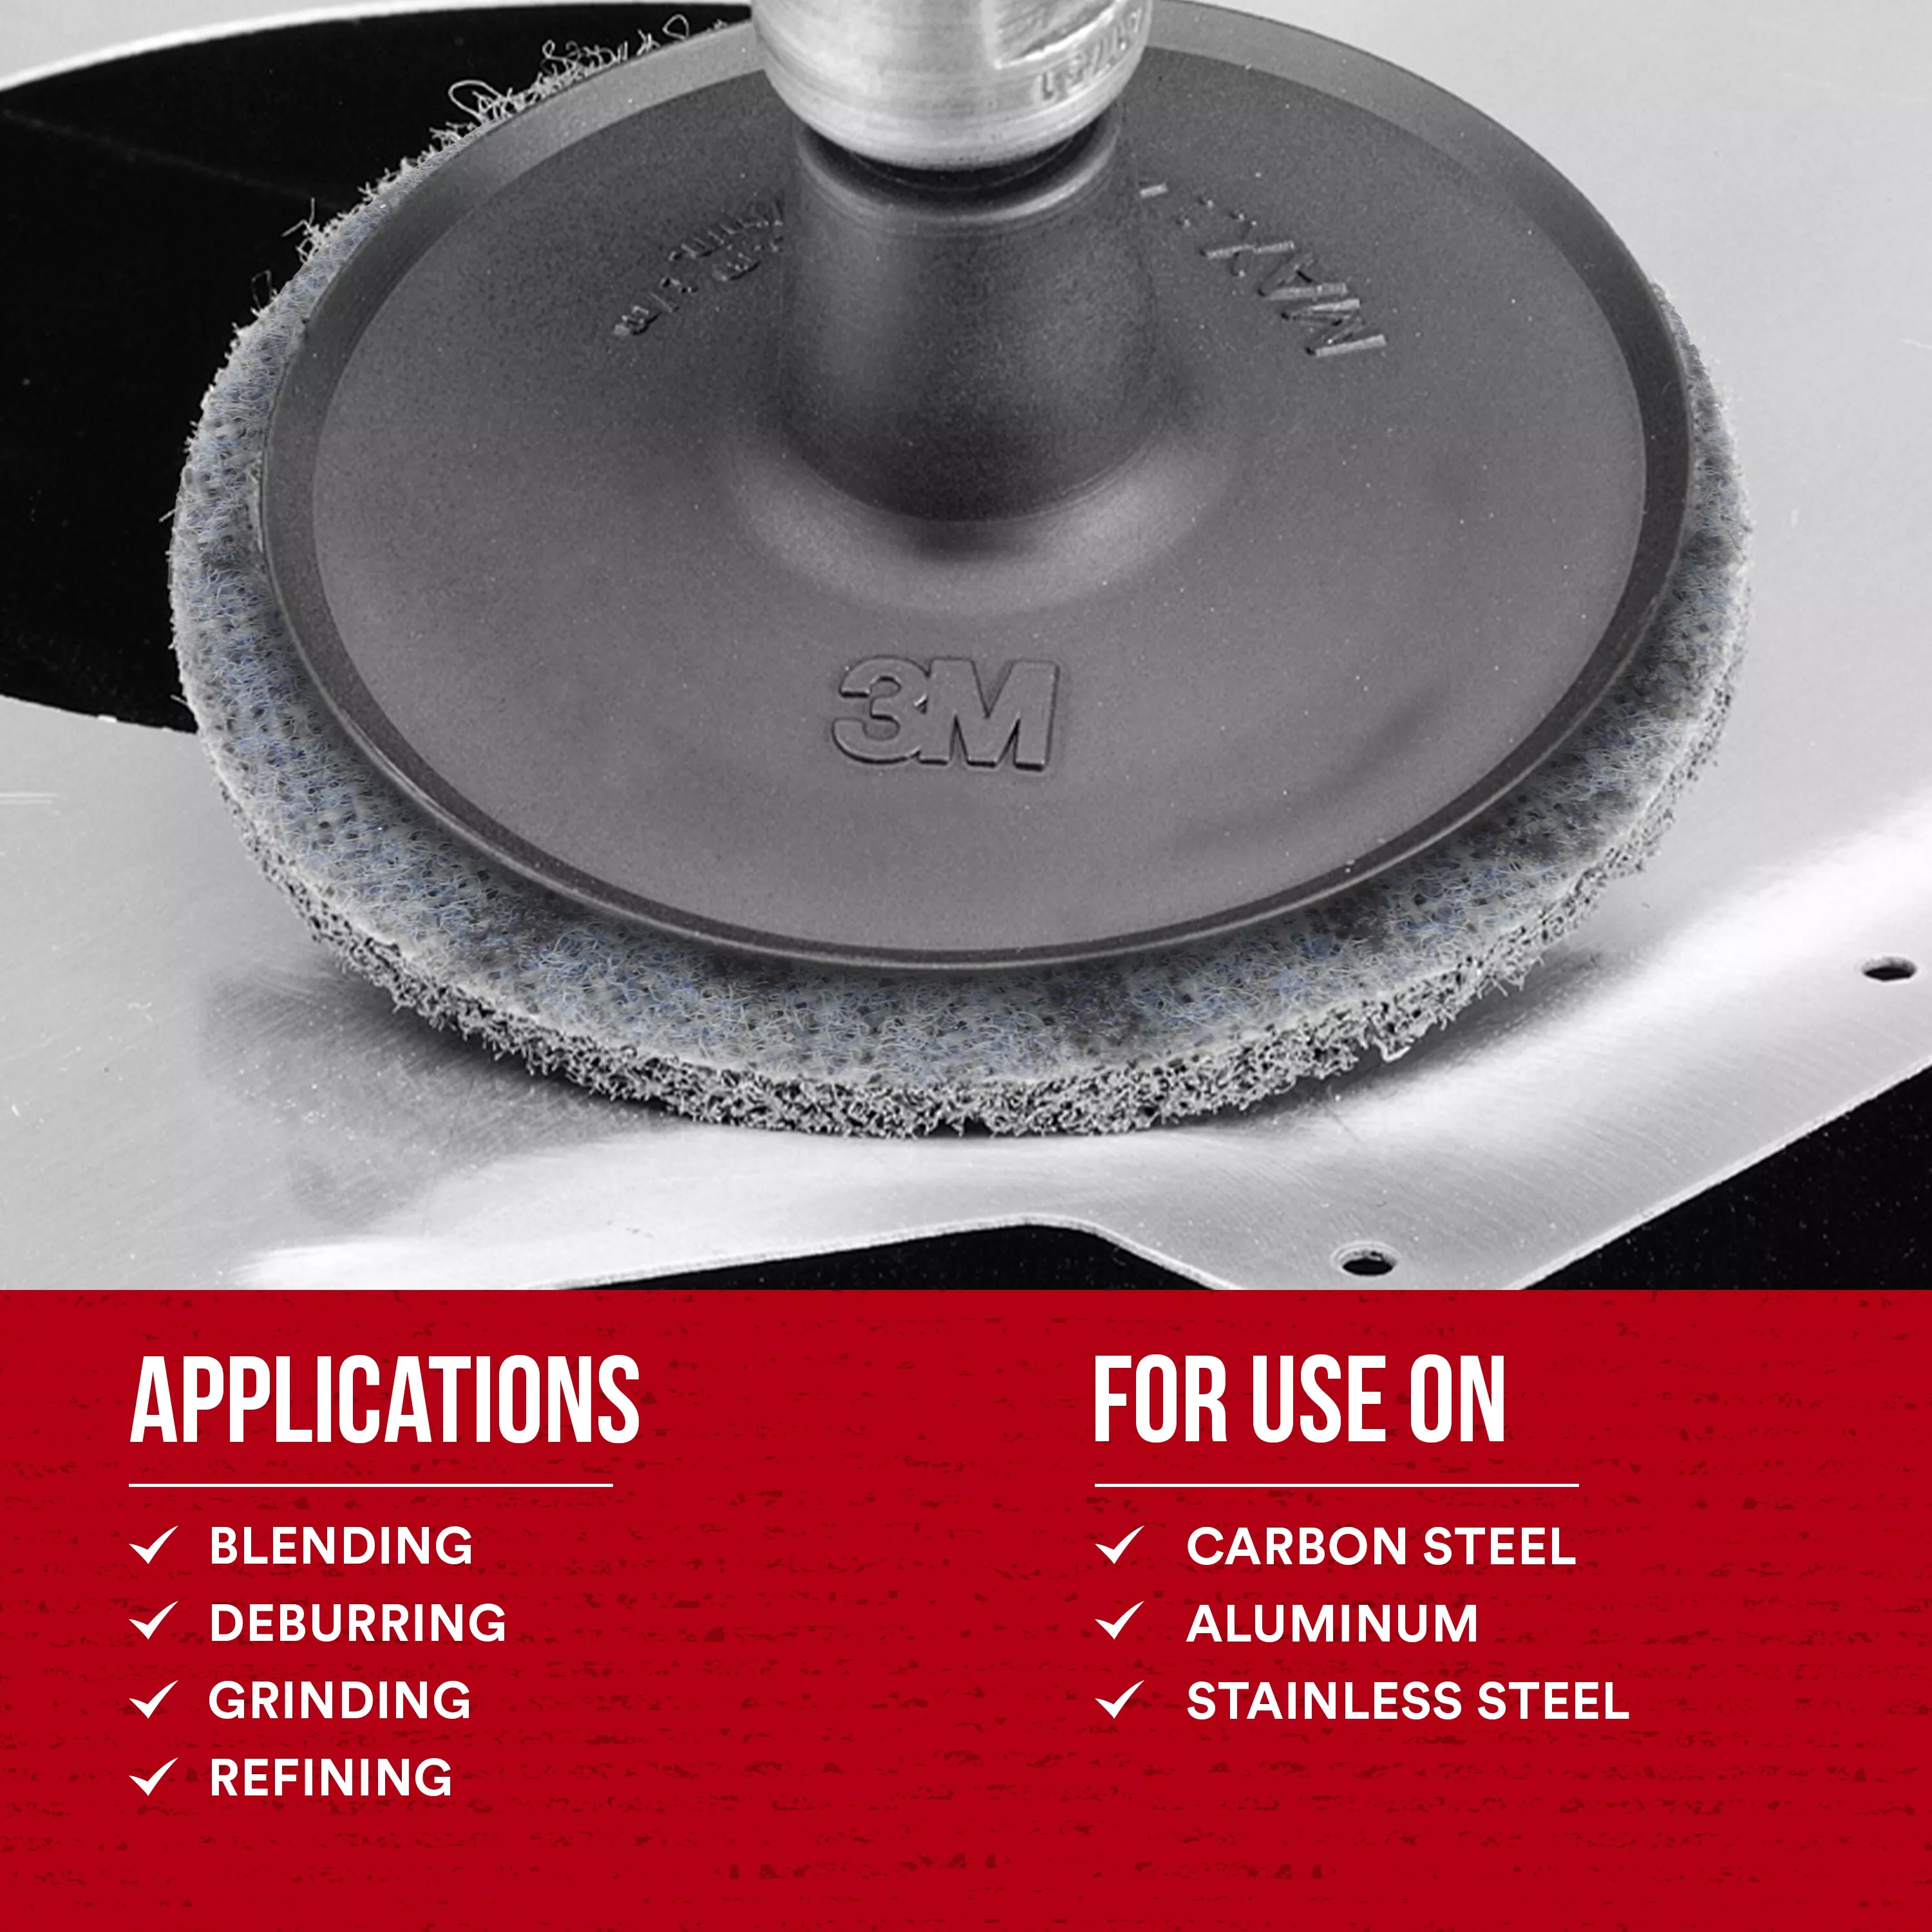 SKU 7010309546 | Scotch-Brite™ Roloc™ SE Surface Conditioning Disc